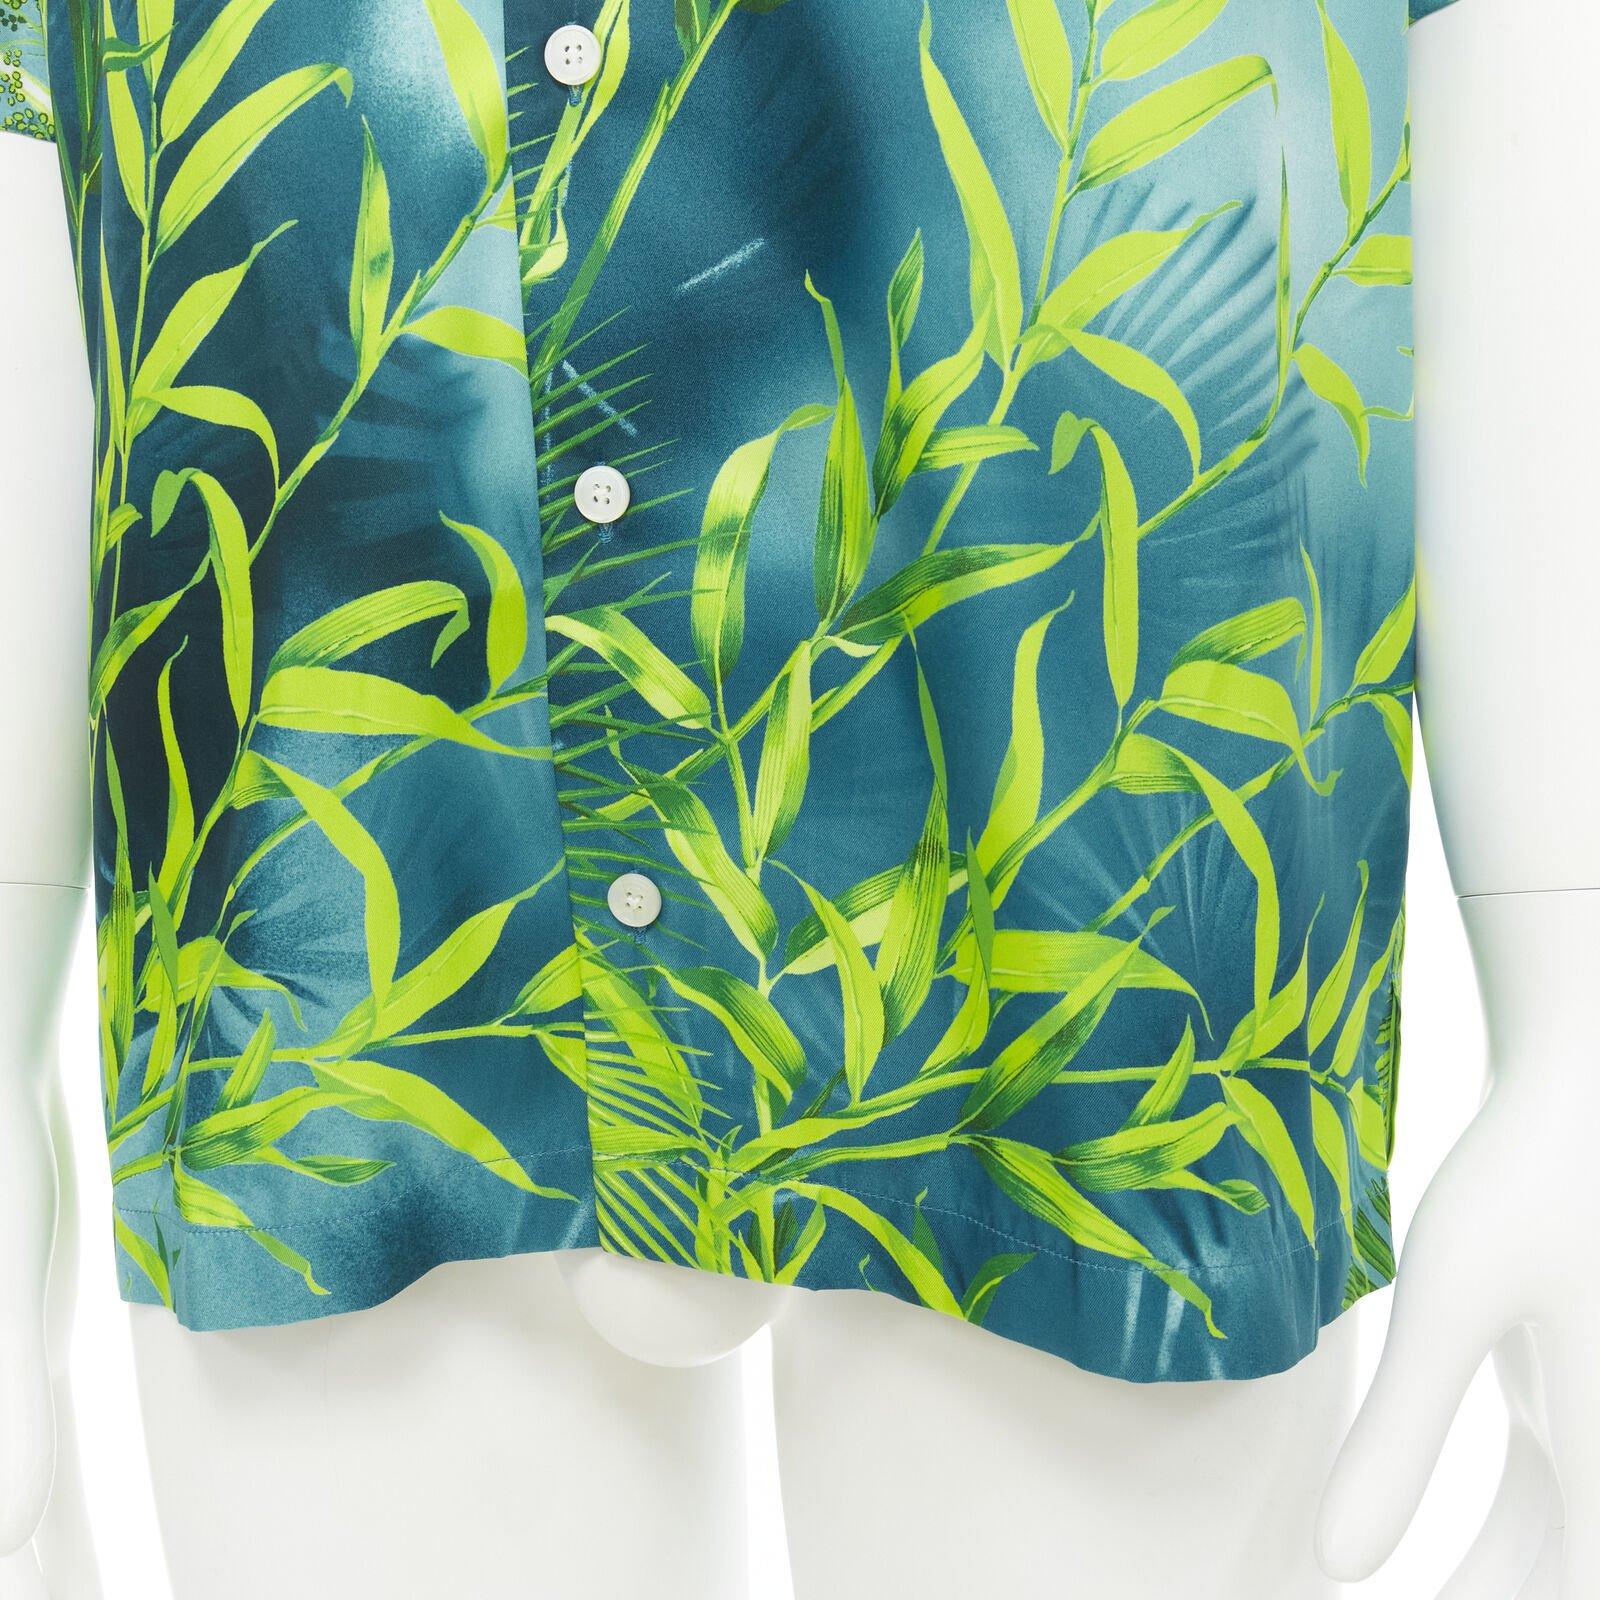 VERSACE 2020 Iconic JLo Jungle print green tropical print shirt EU41 XL 3